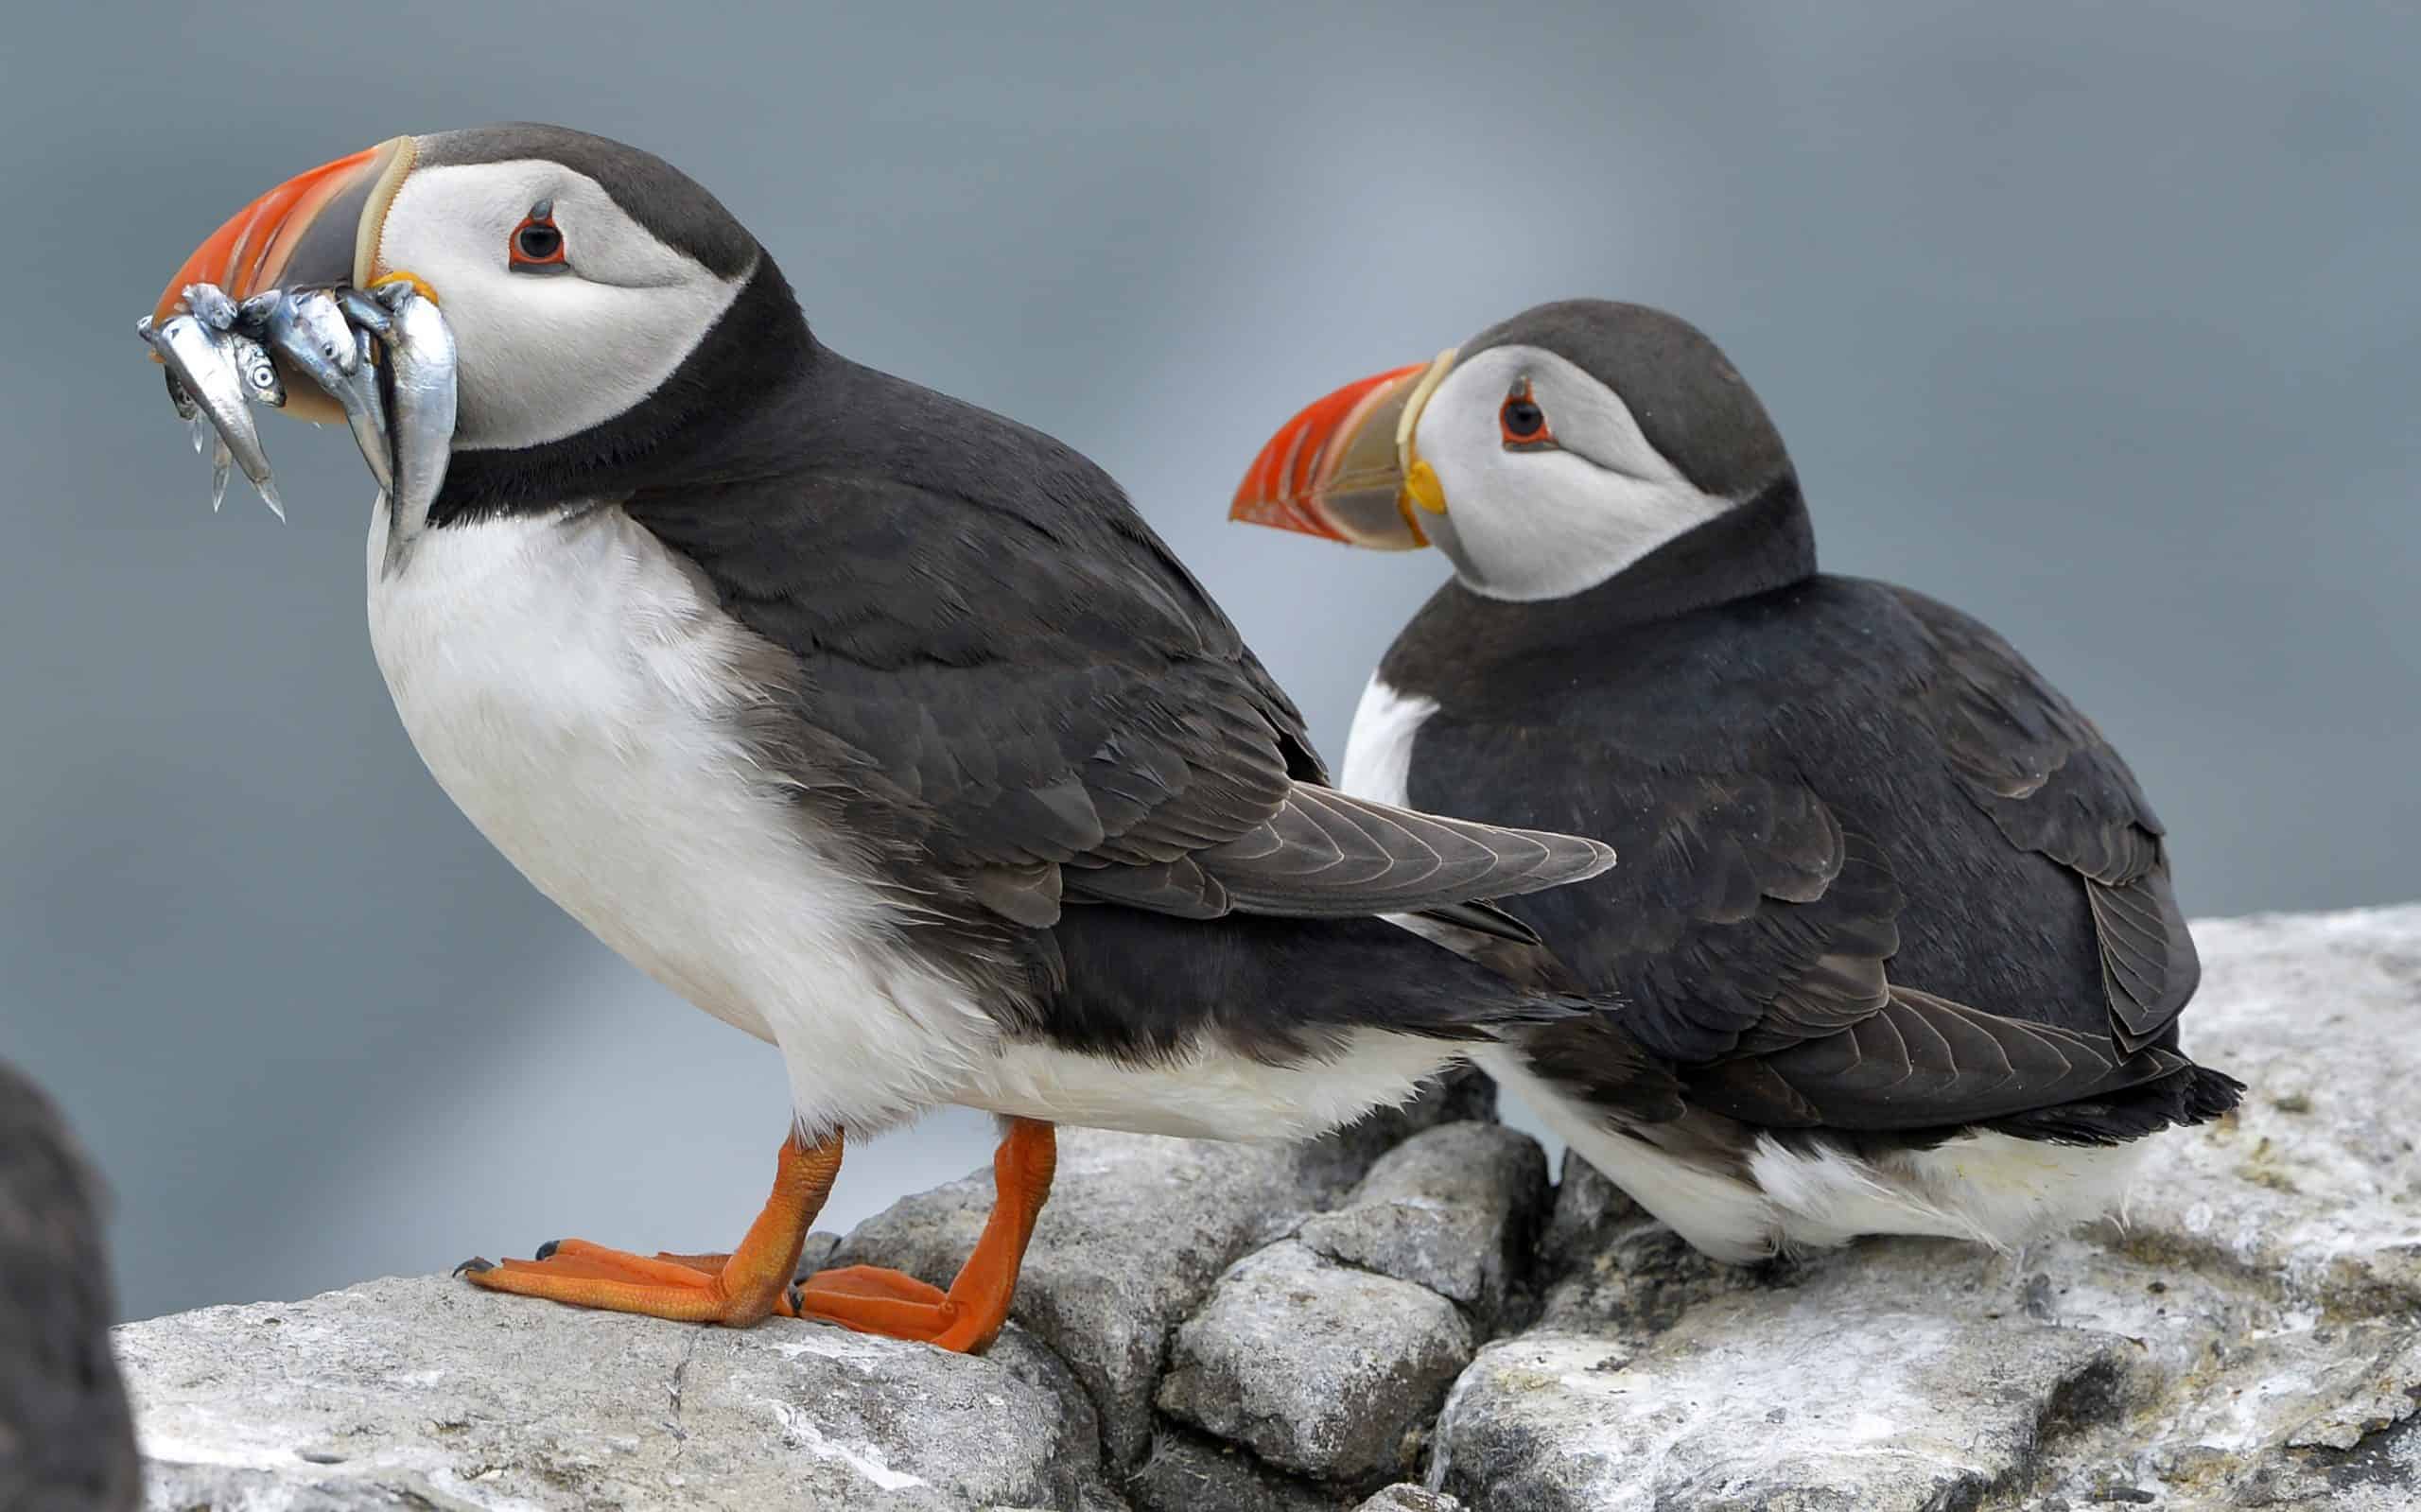 ‘Threat to marine biodiversity:’ Plastic found in thousands of seabird nests across Europe